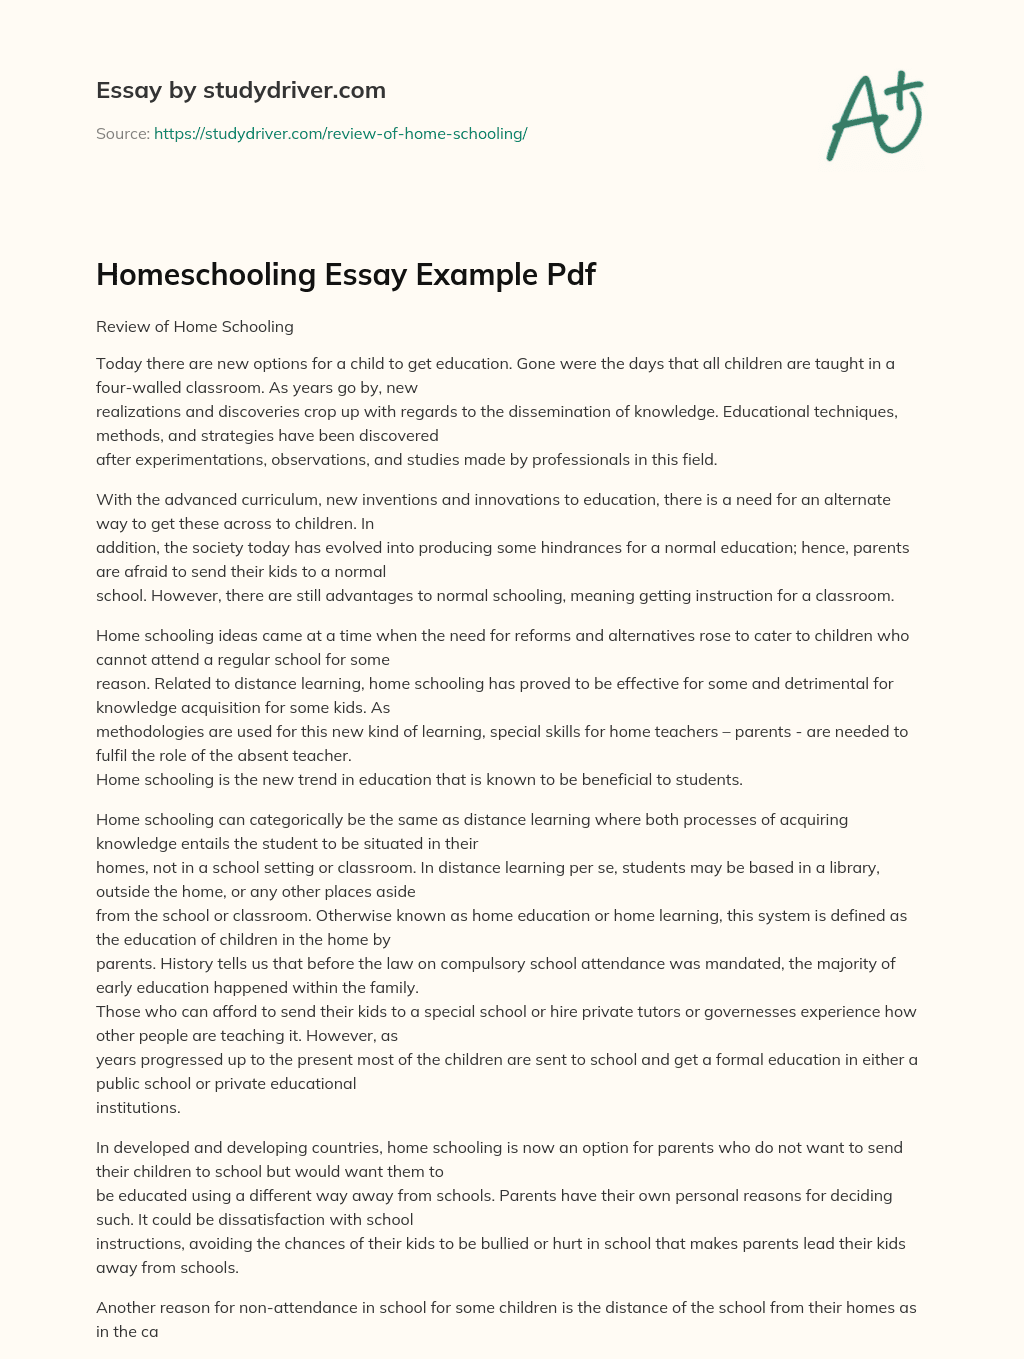 Homeschooling Essay Example Pdf essay